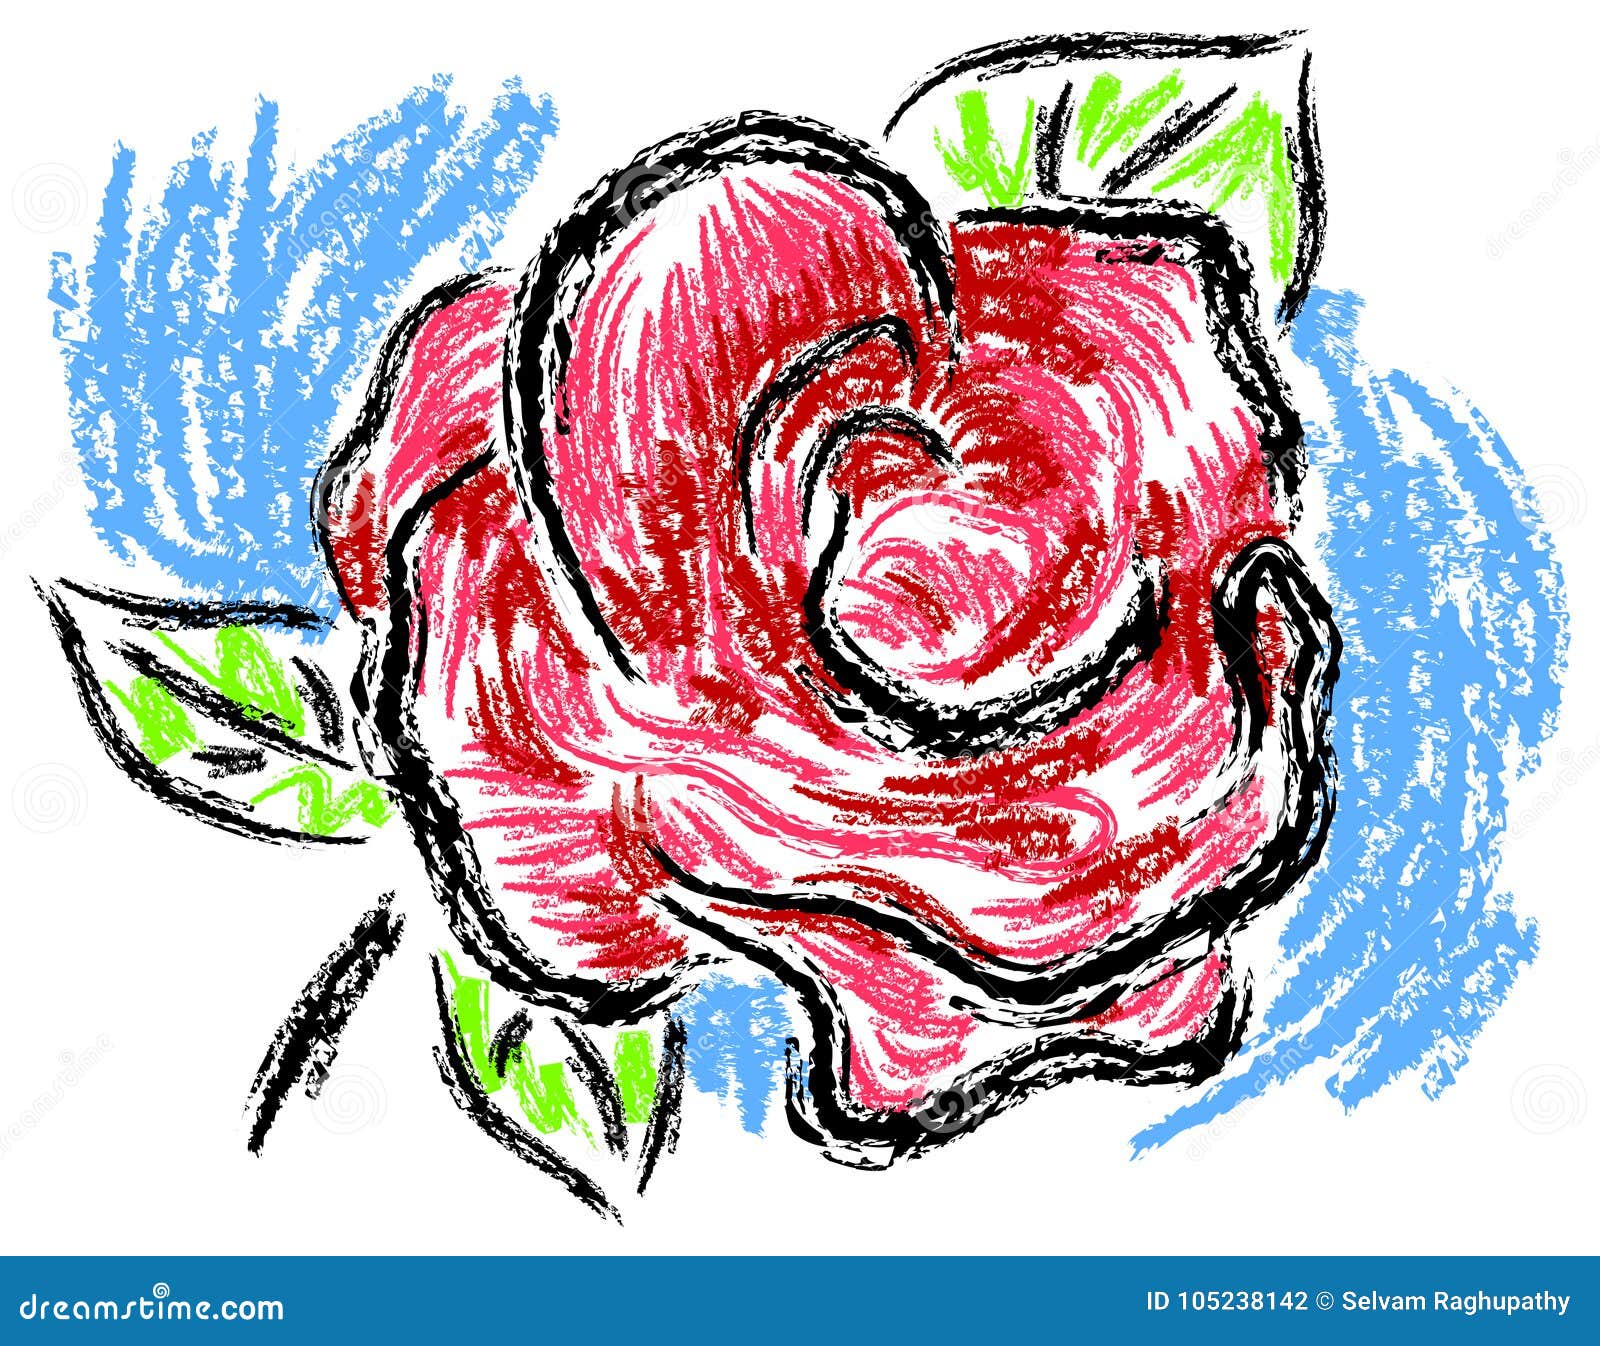 Charcoal drawing of a rose petal on Craiyon